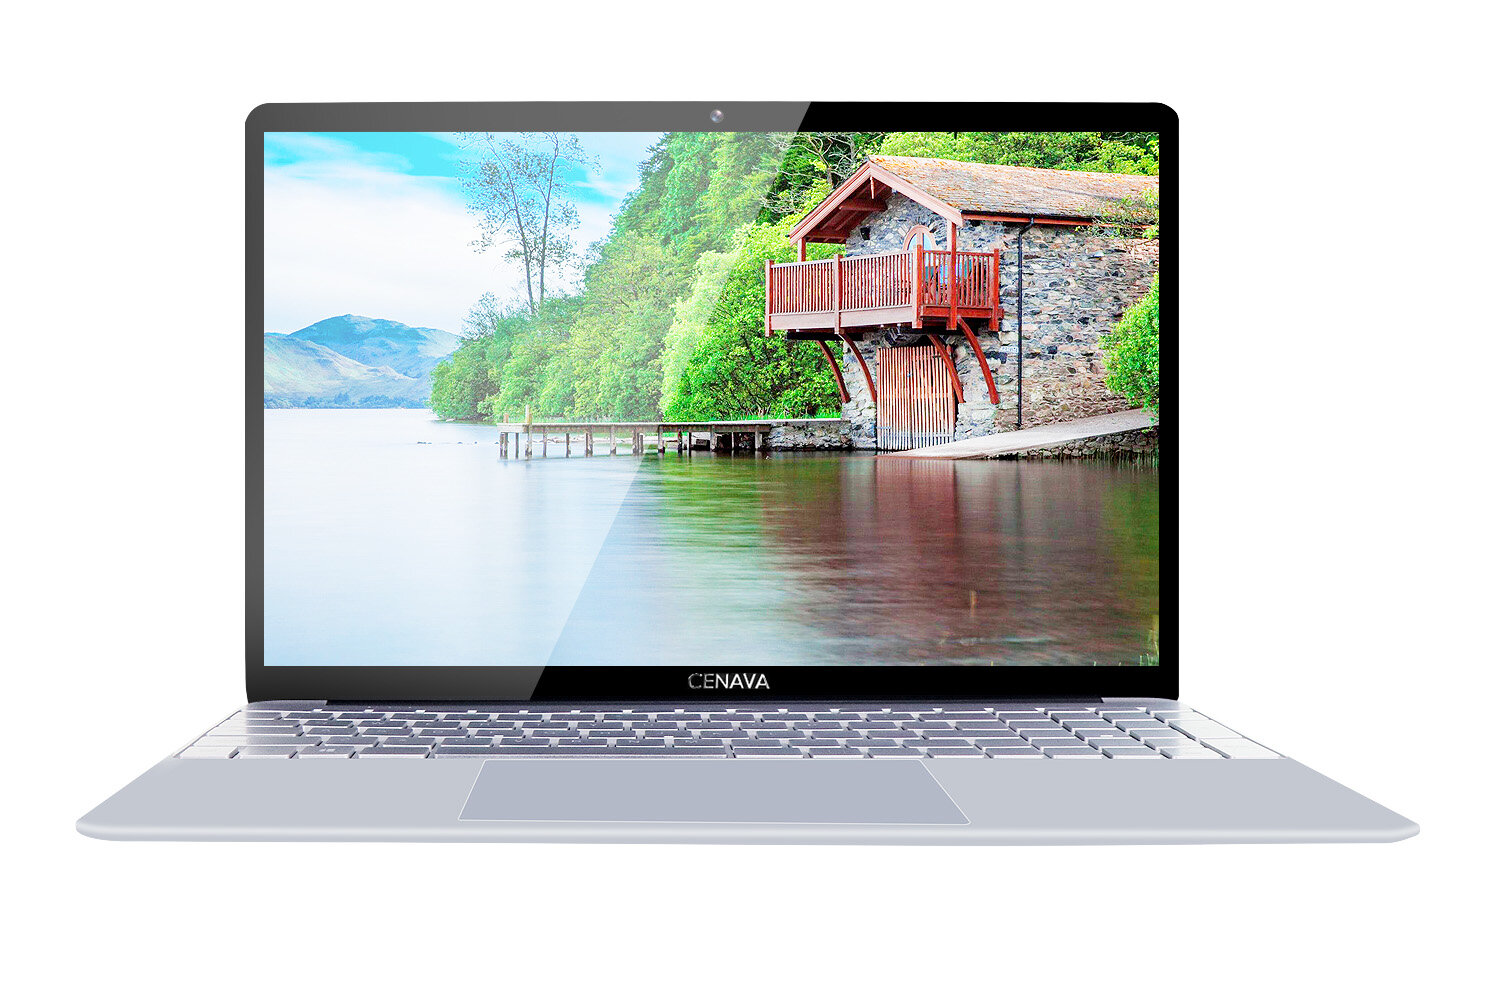 CENAVA F151 Laptop 15.6 inch Intel Core J3455 Intel HD Graphics 500 Win10 8G RAM 512GB SSD Notebook TN Screen